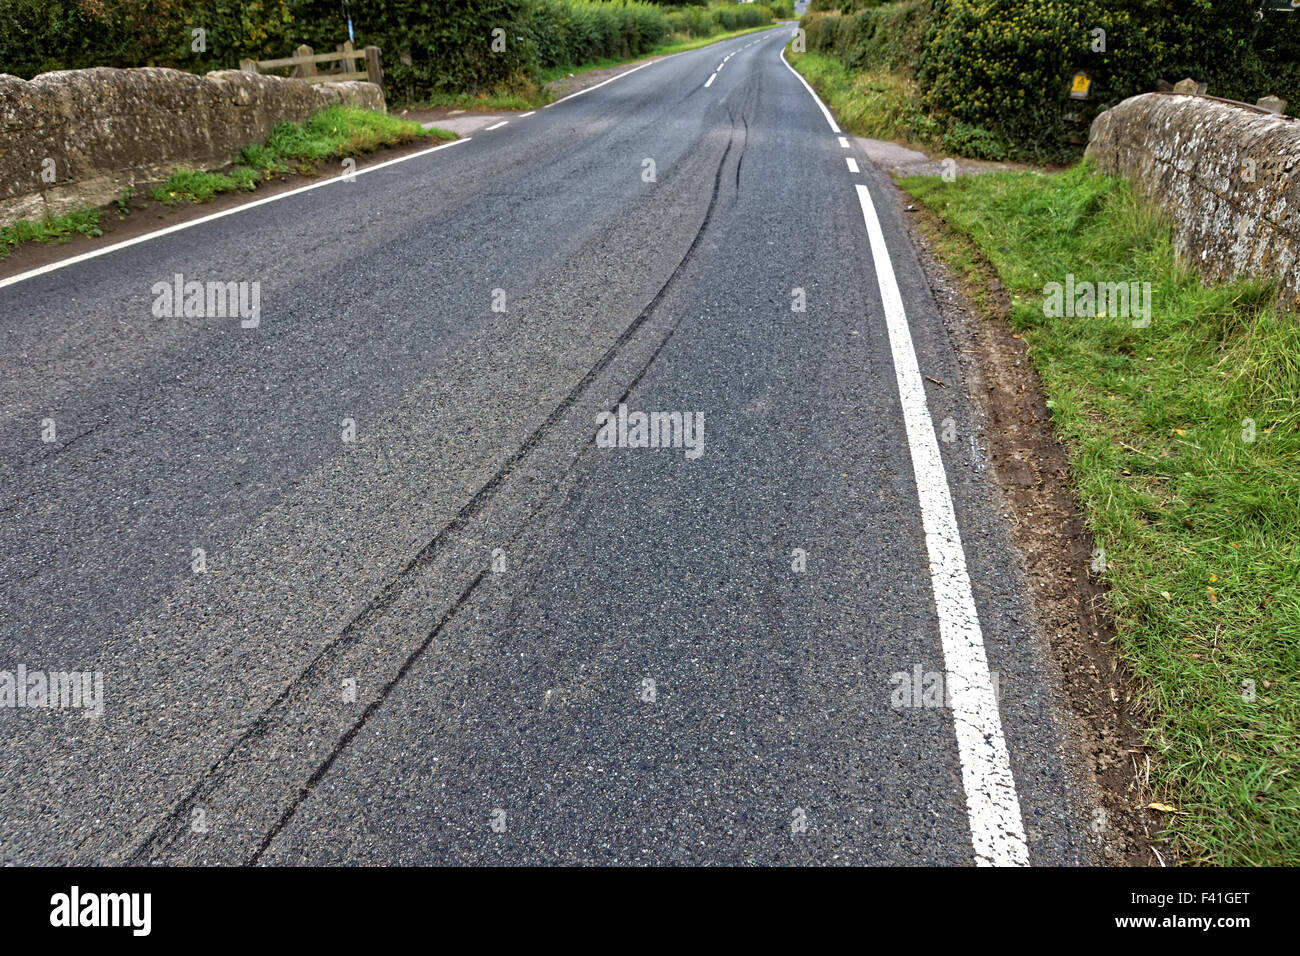 Longs skid marks on road. Stock Photo